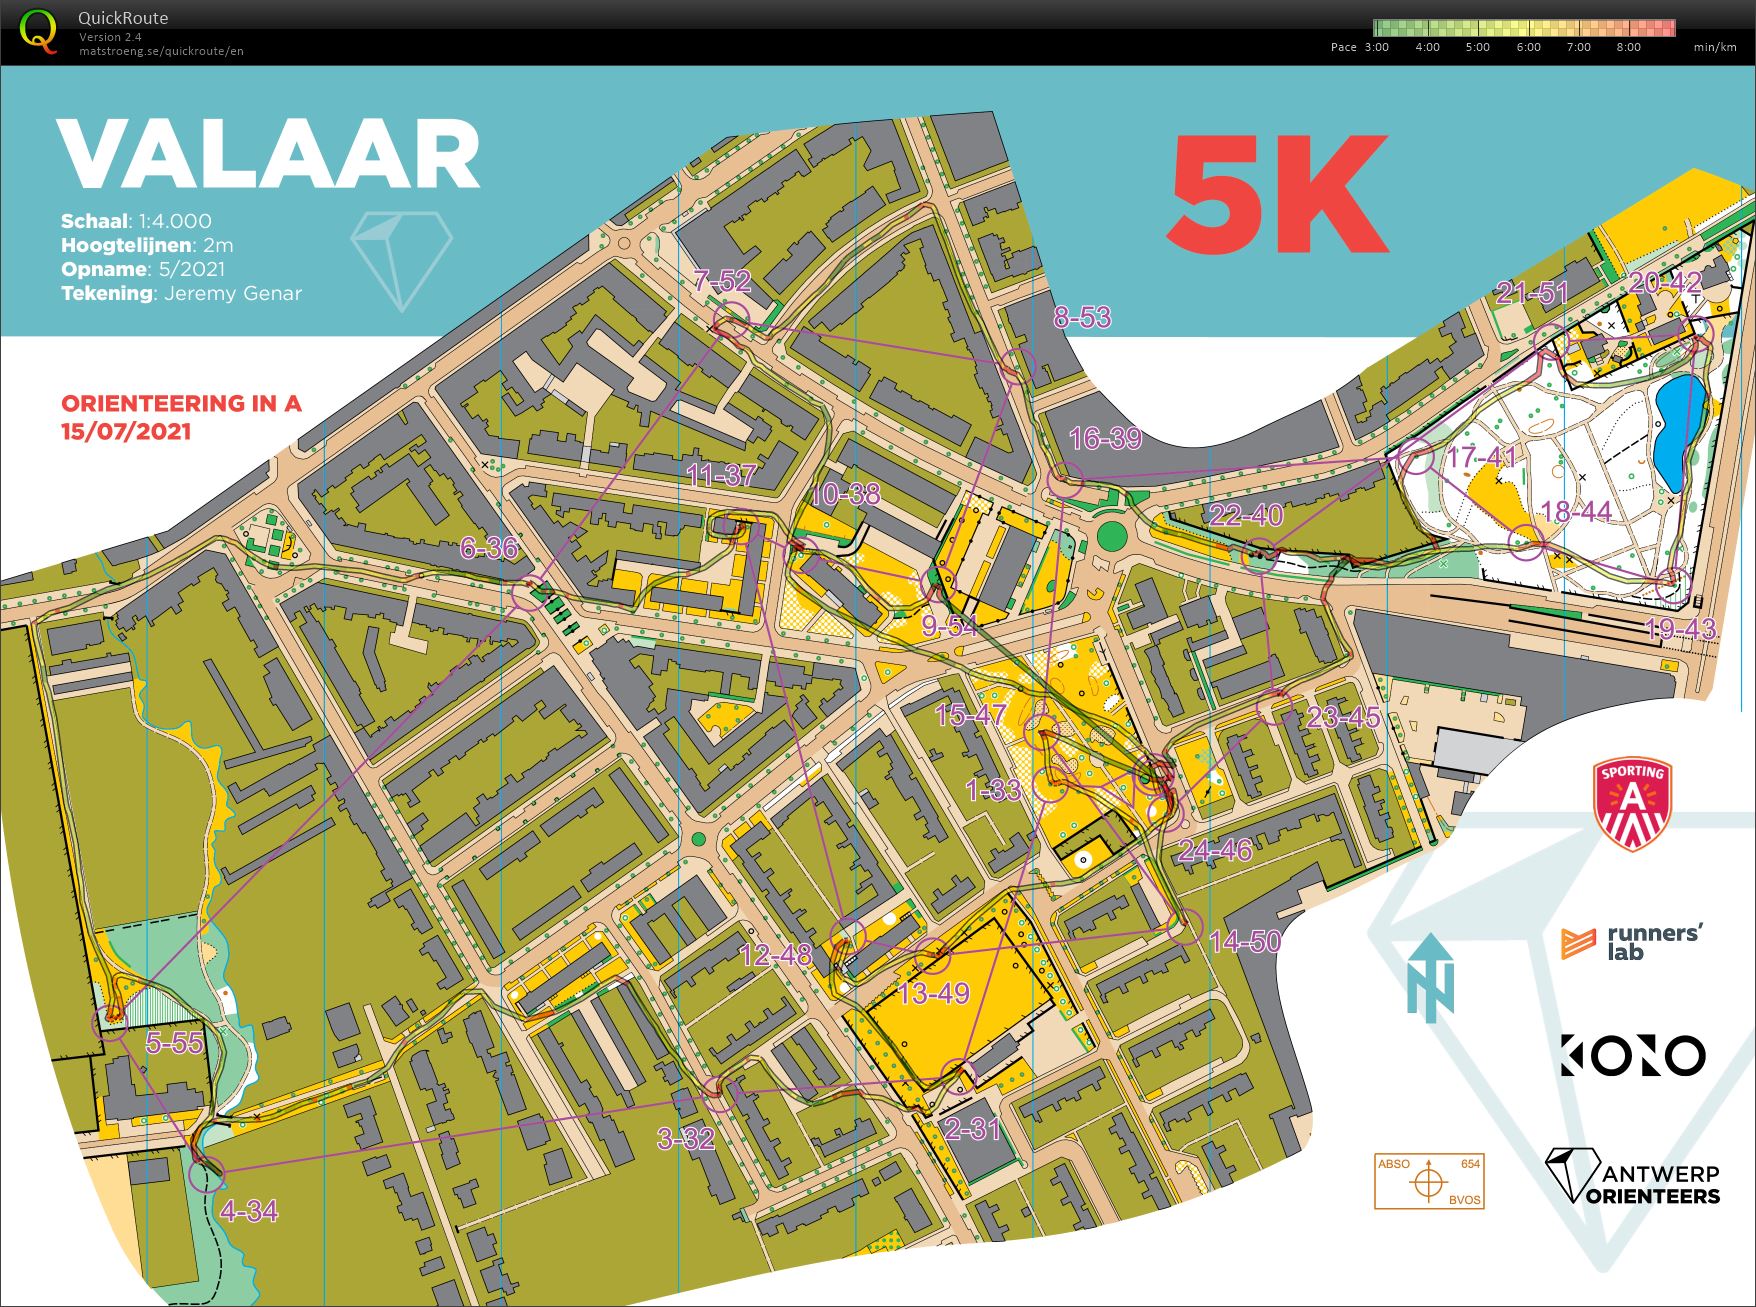 Orienteering in A - Valaar (15/07/2021)